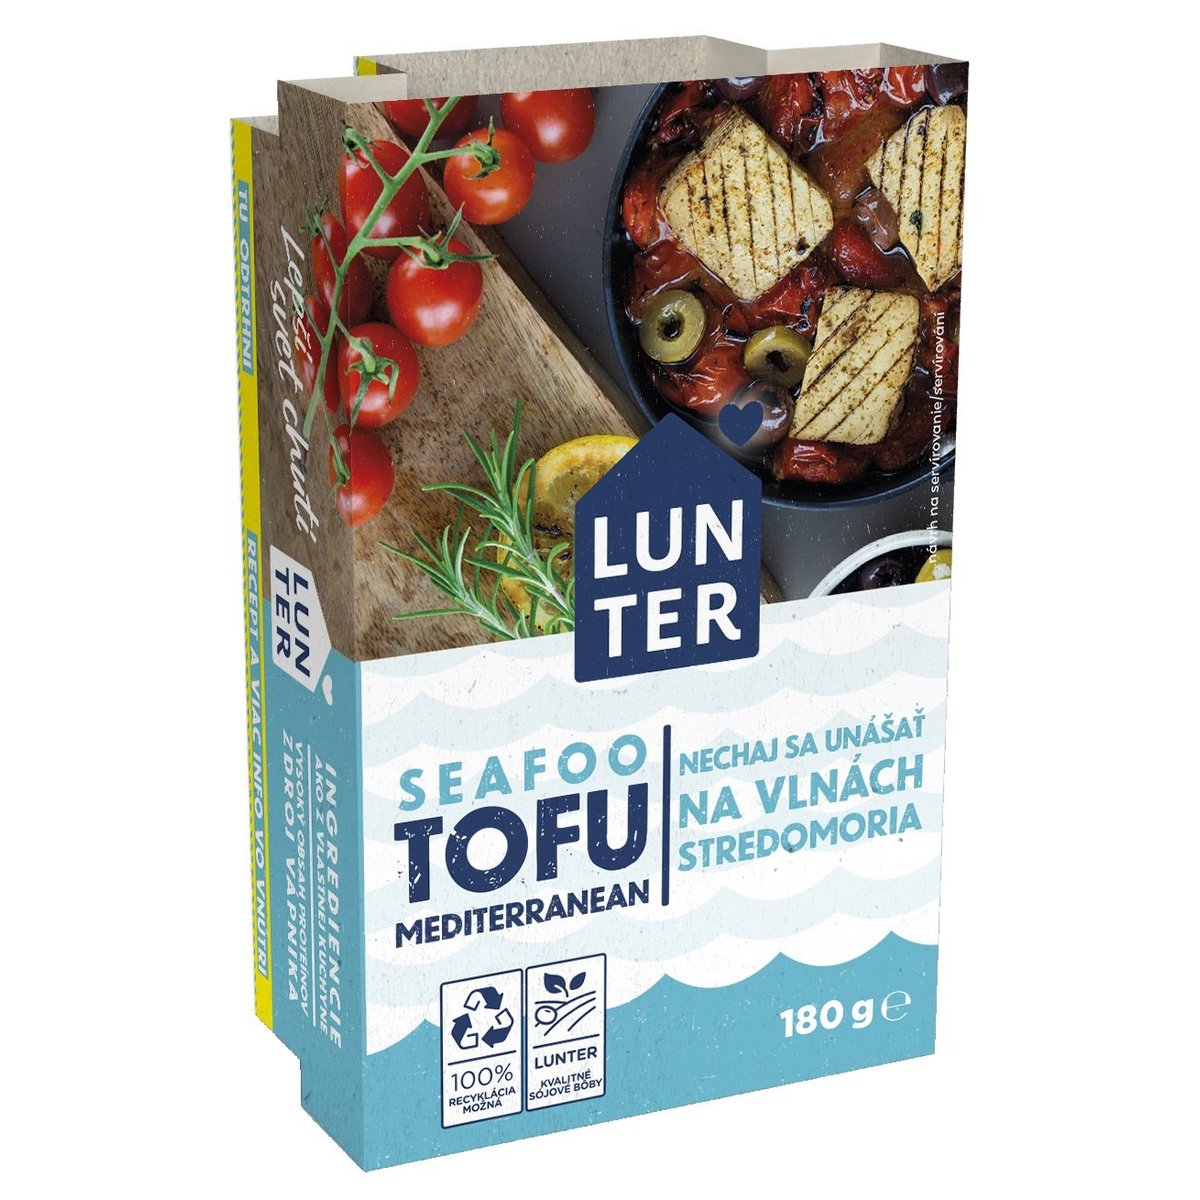 Lunter Seafoo tofu Mediterranean